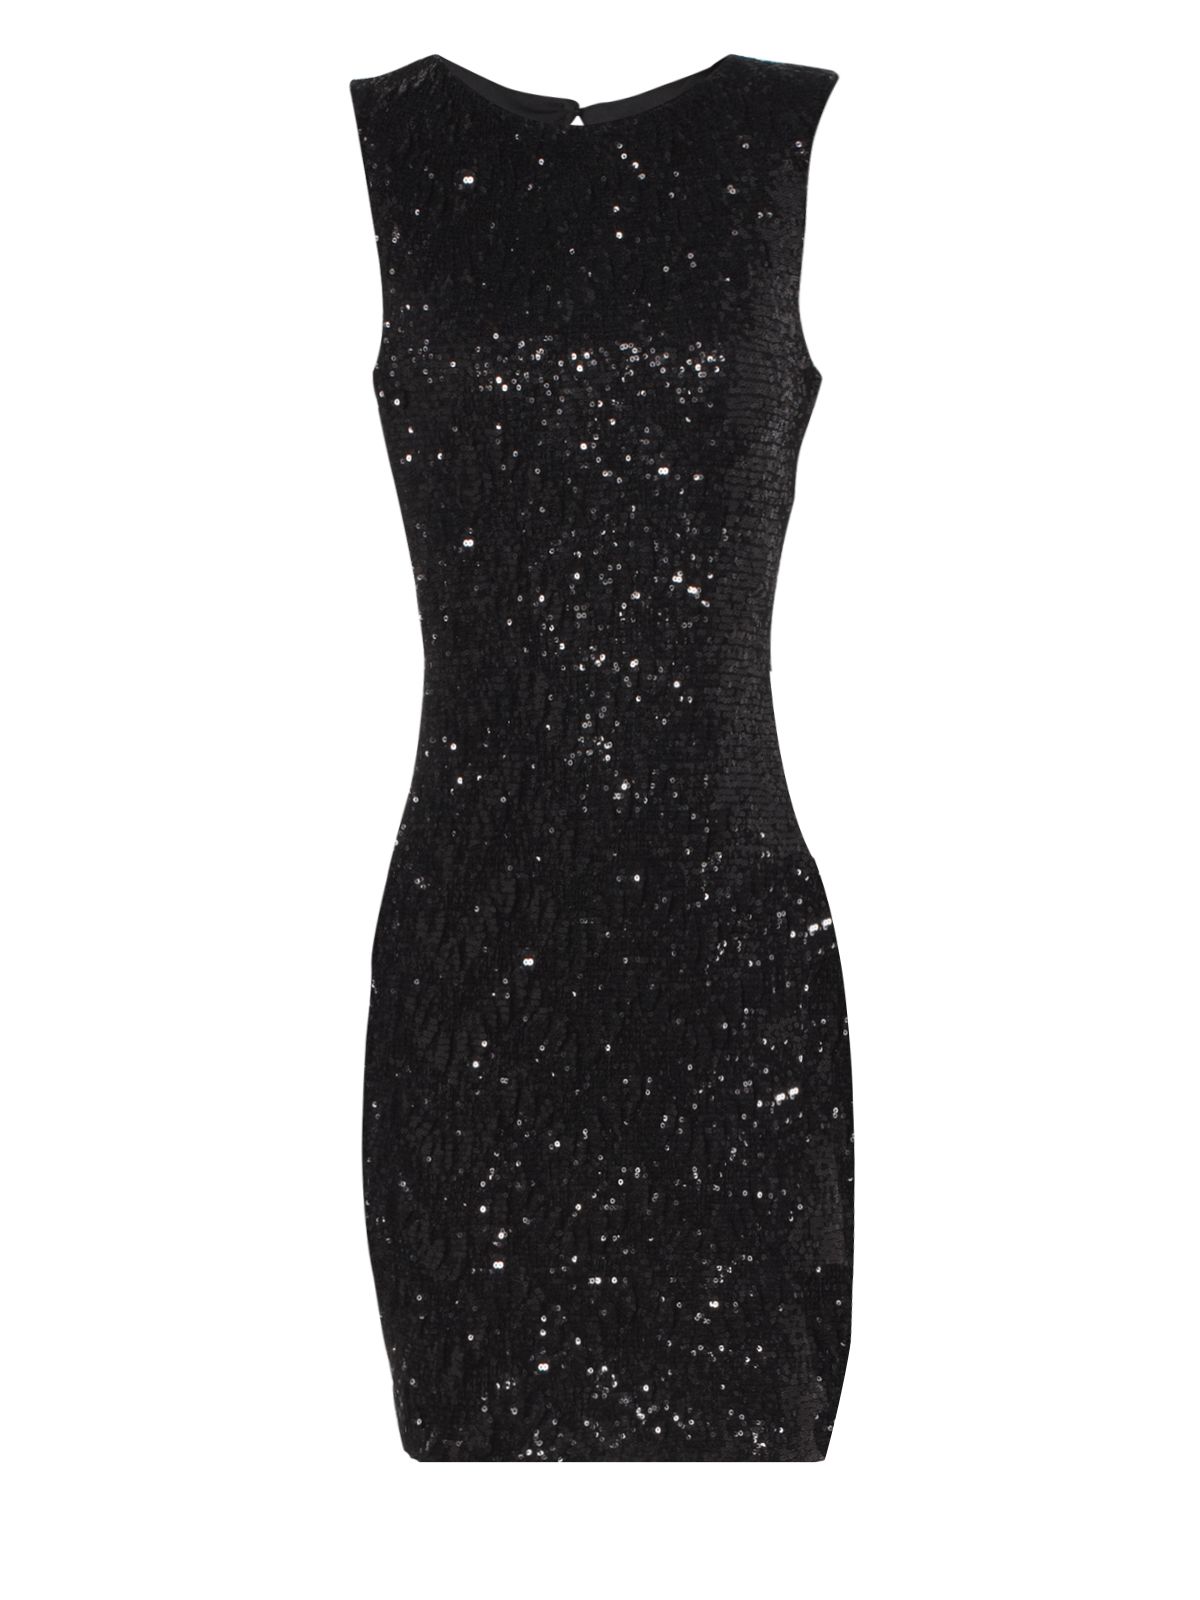 Jane Norman Sequin Dress in Black | Lyst